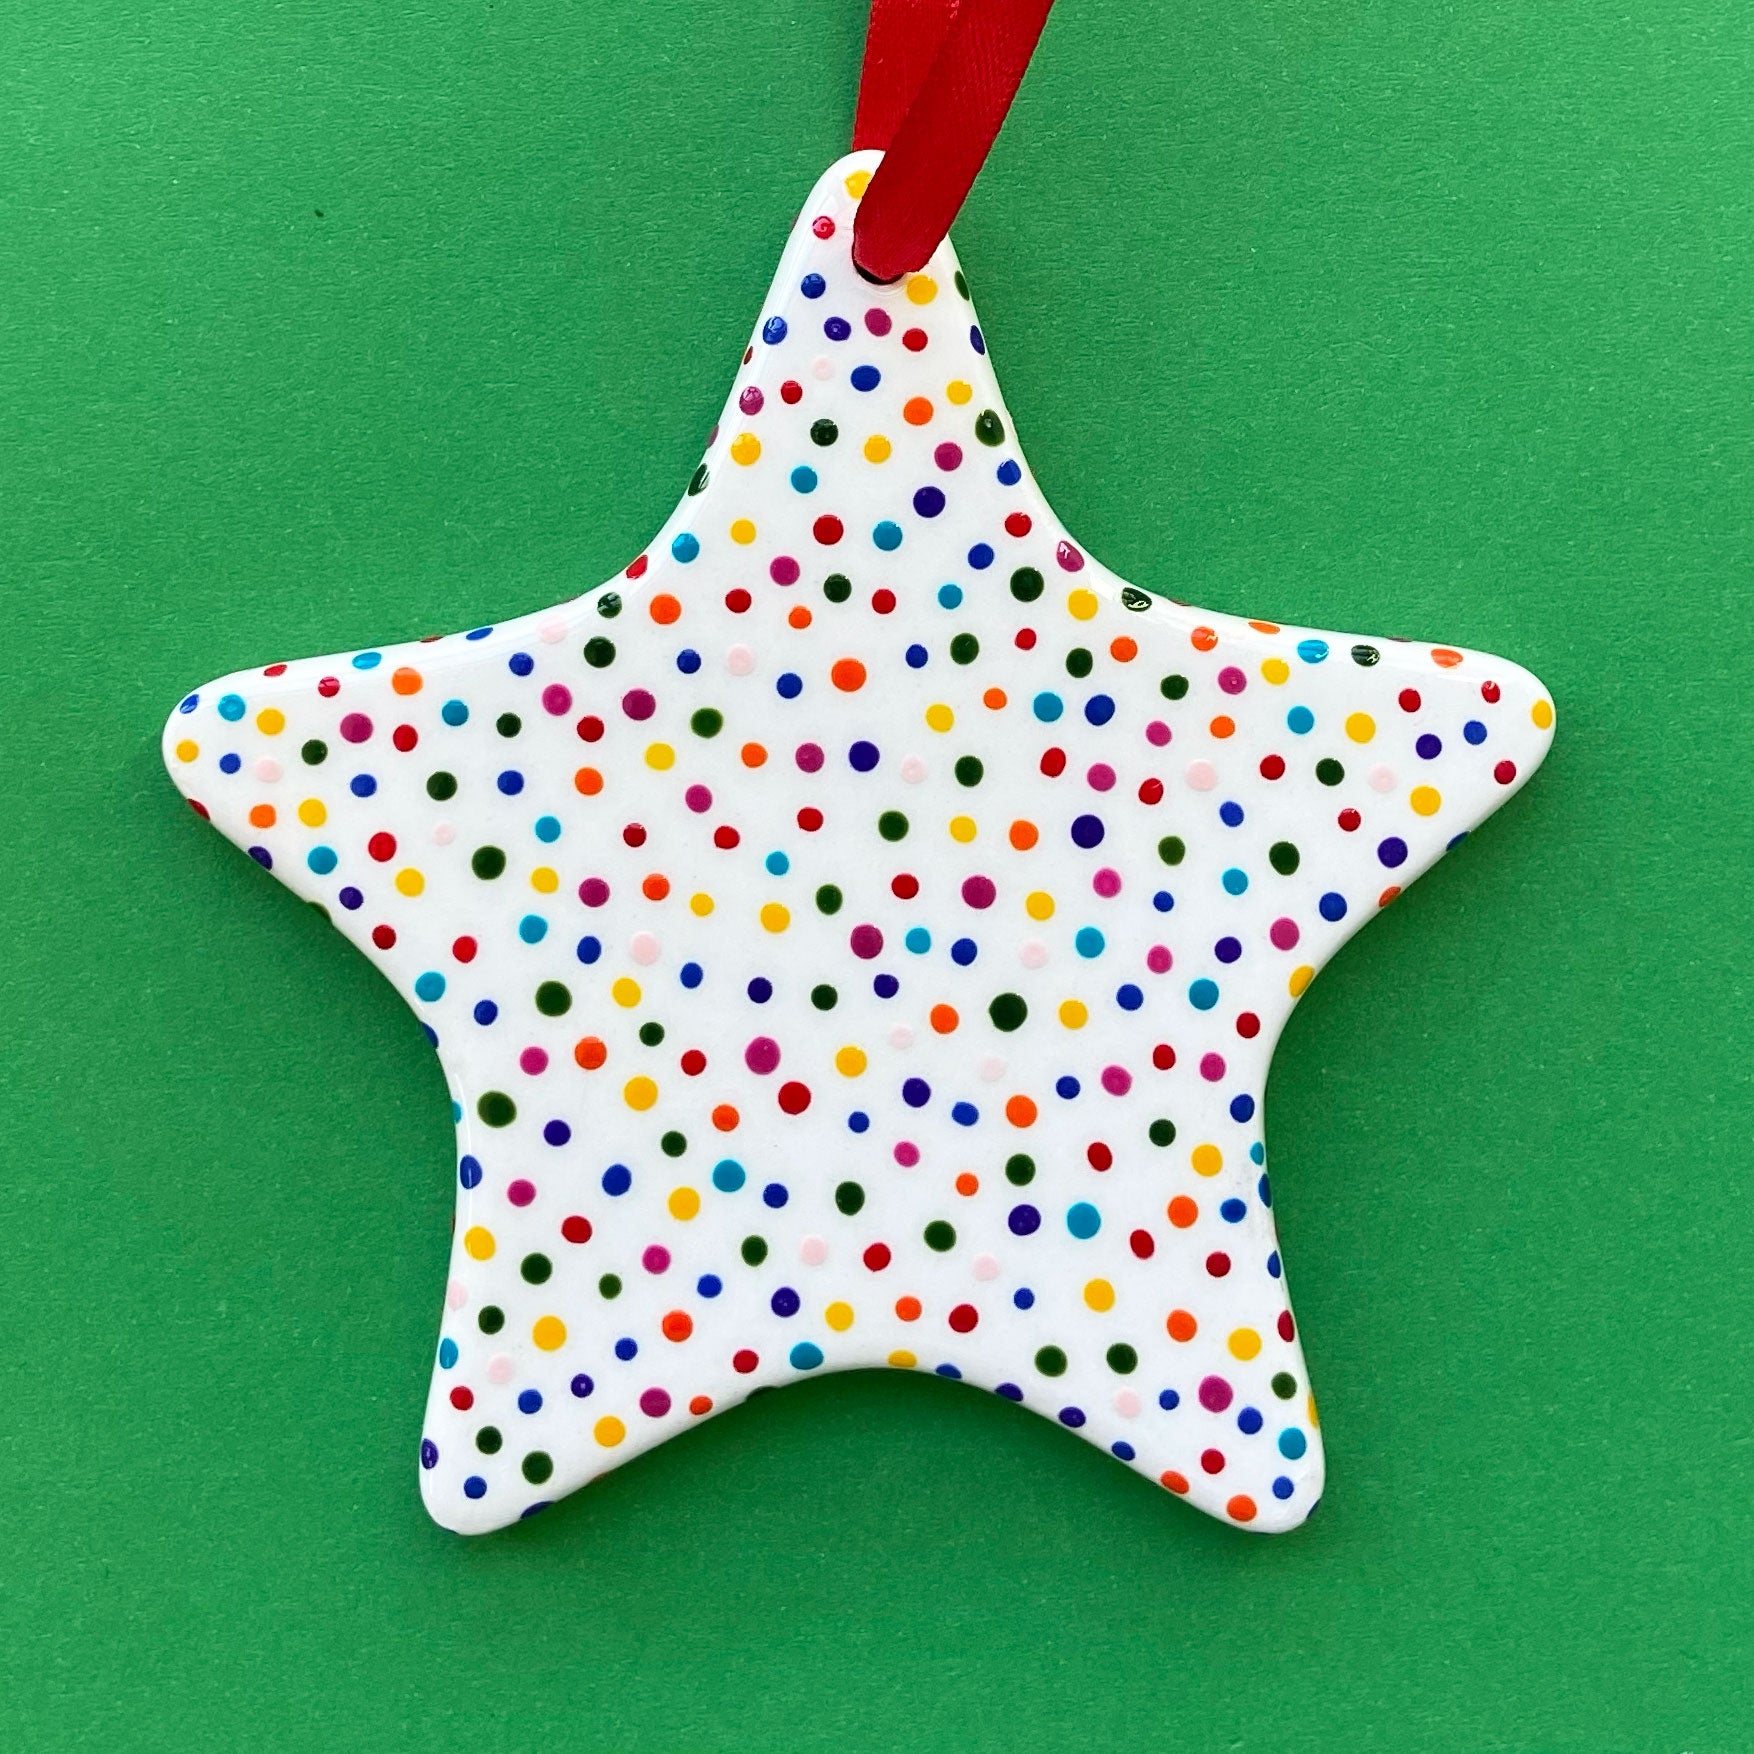 Rainbow Dot 1 Hand Painted Star Ornament